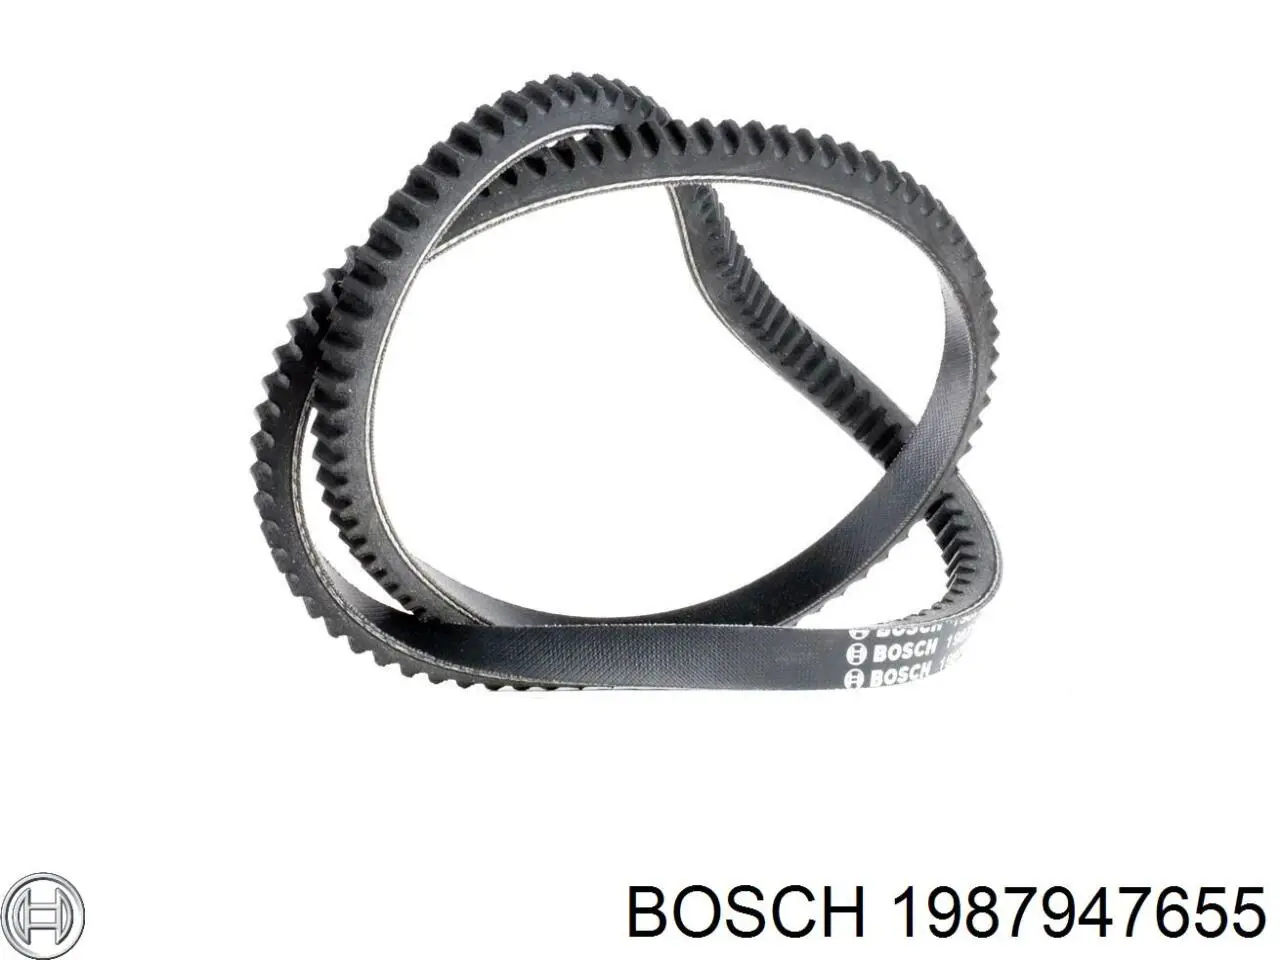 1 987 947 655 Bosch correa trapezoidal